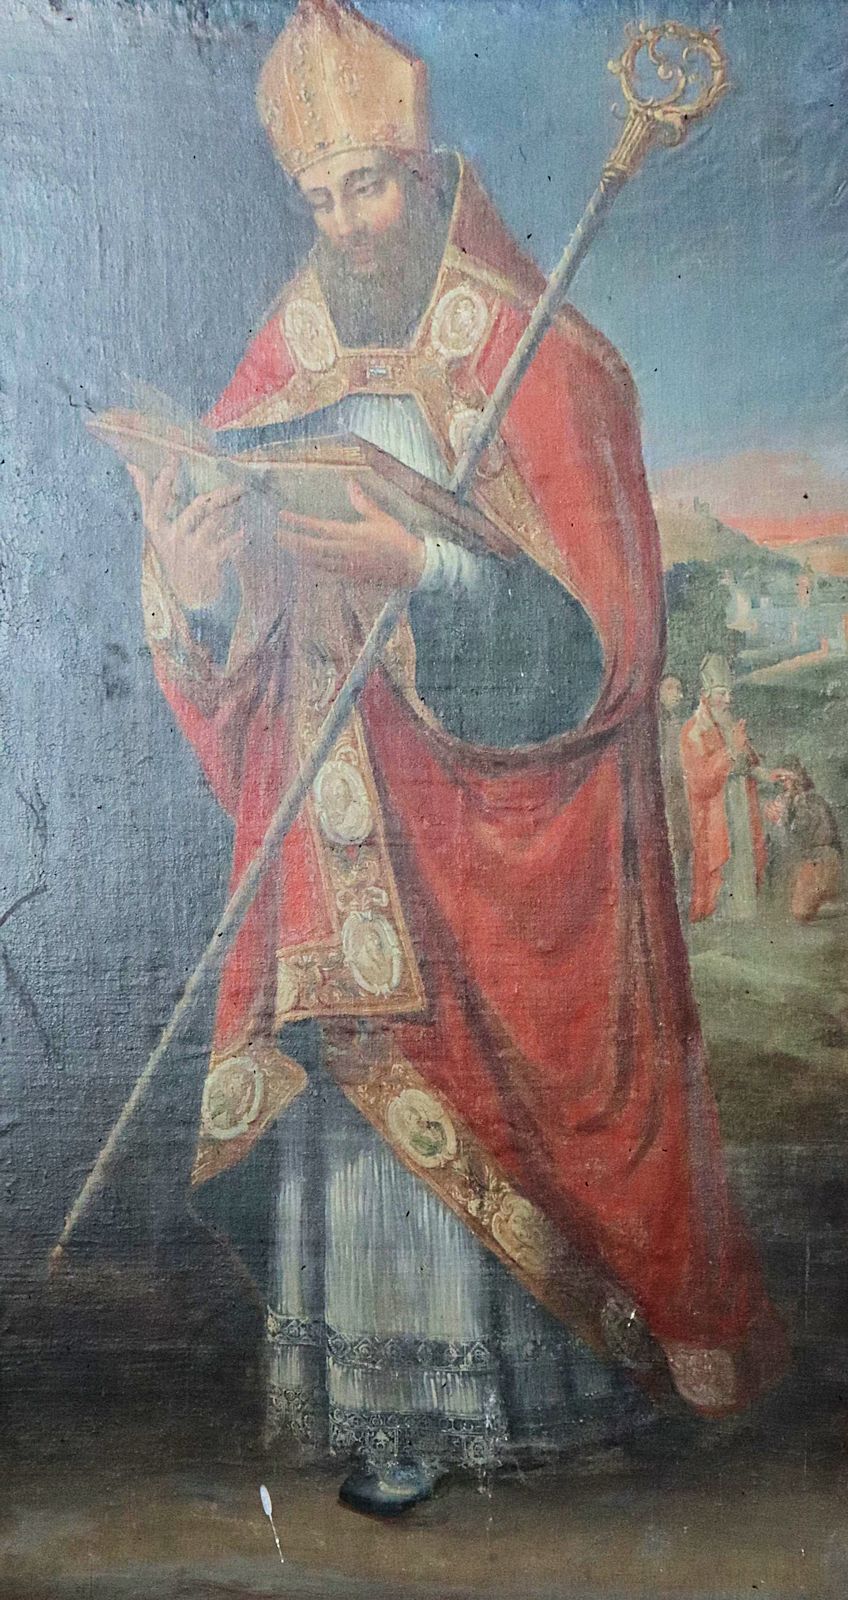 Gemälde in der Kathedrale in Toul